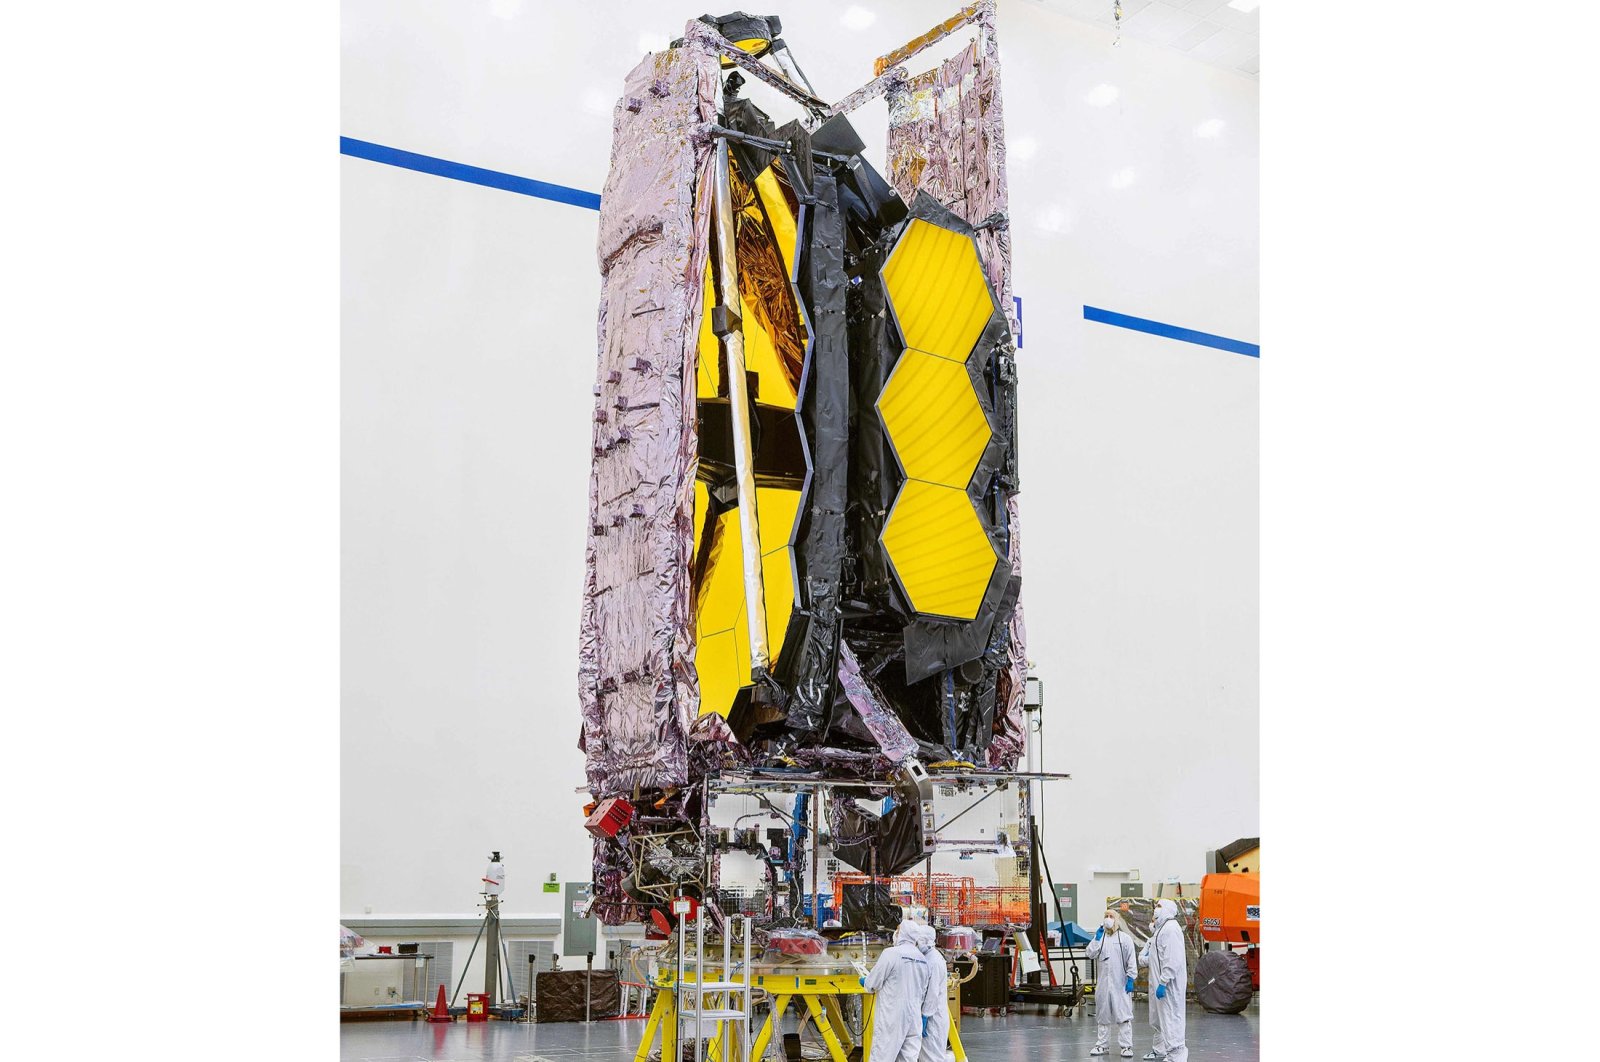 NASA’s James Webb Space Telescope is seen being prepared for shipment to its launch site at Northrop Grumman’s facilities in Redondo Beach, California, U.S., Sept. 8, 2021. (NASA via AFP)